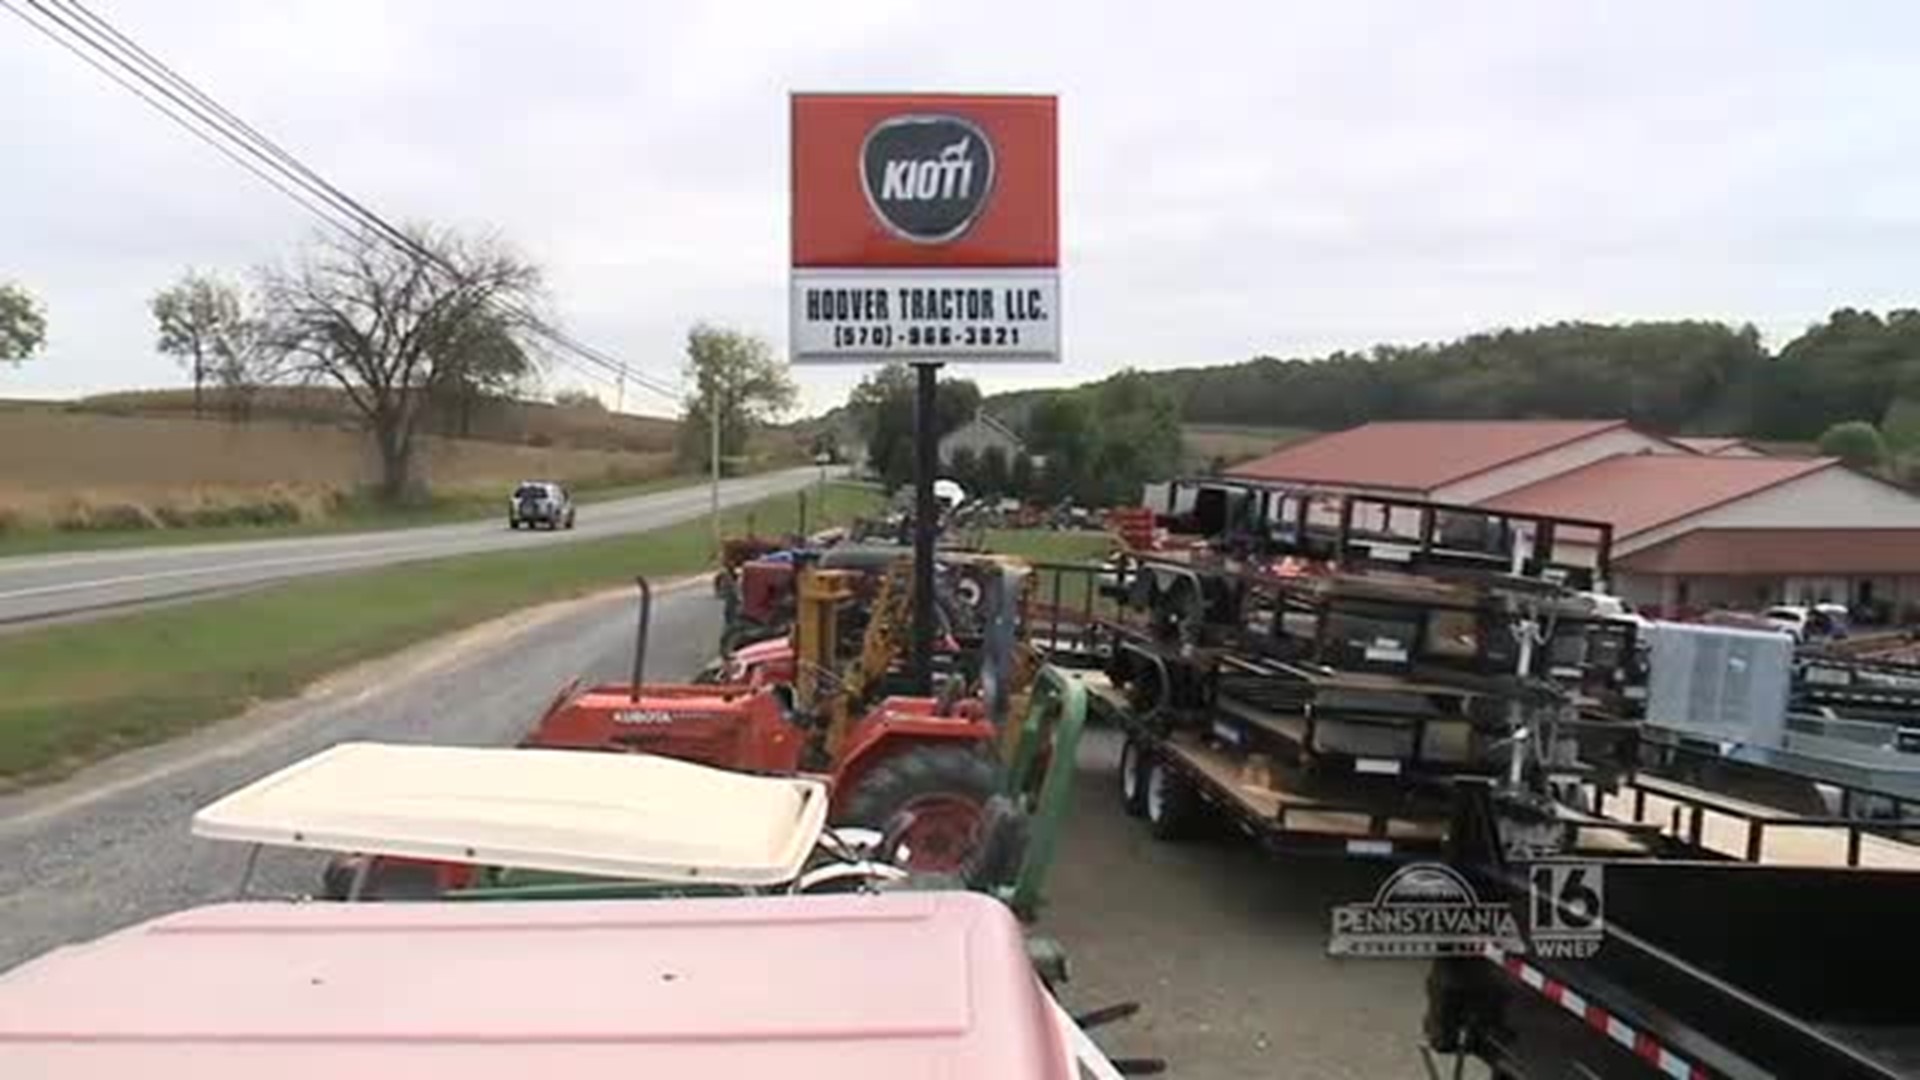 Hoover Tractor/Kioti Krazy Contest Clue #2